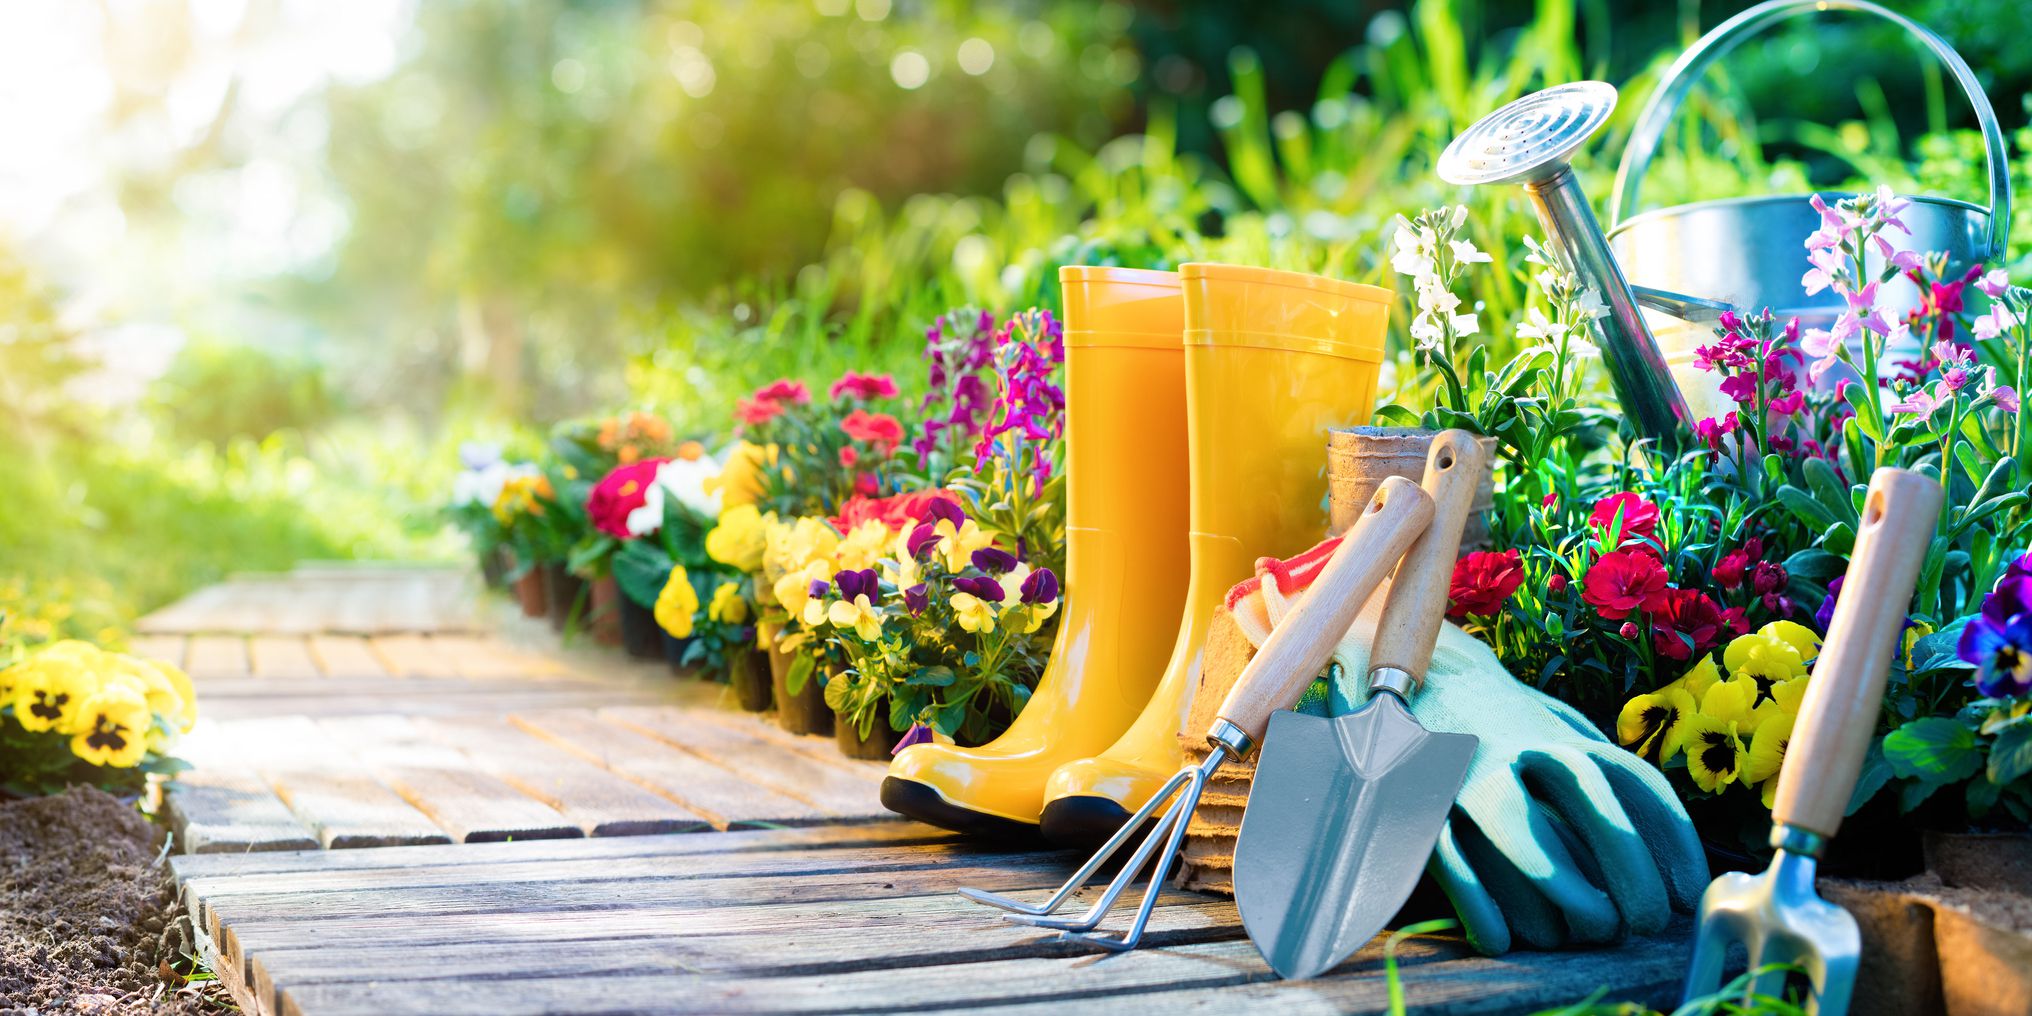 Gardening Advice - Expert Tips For a Blooming Garden